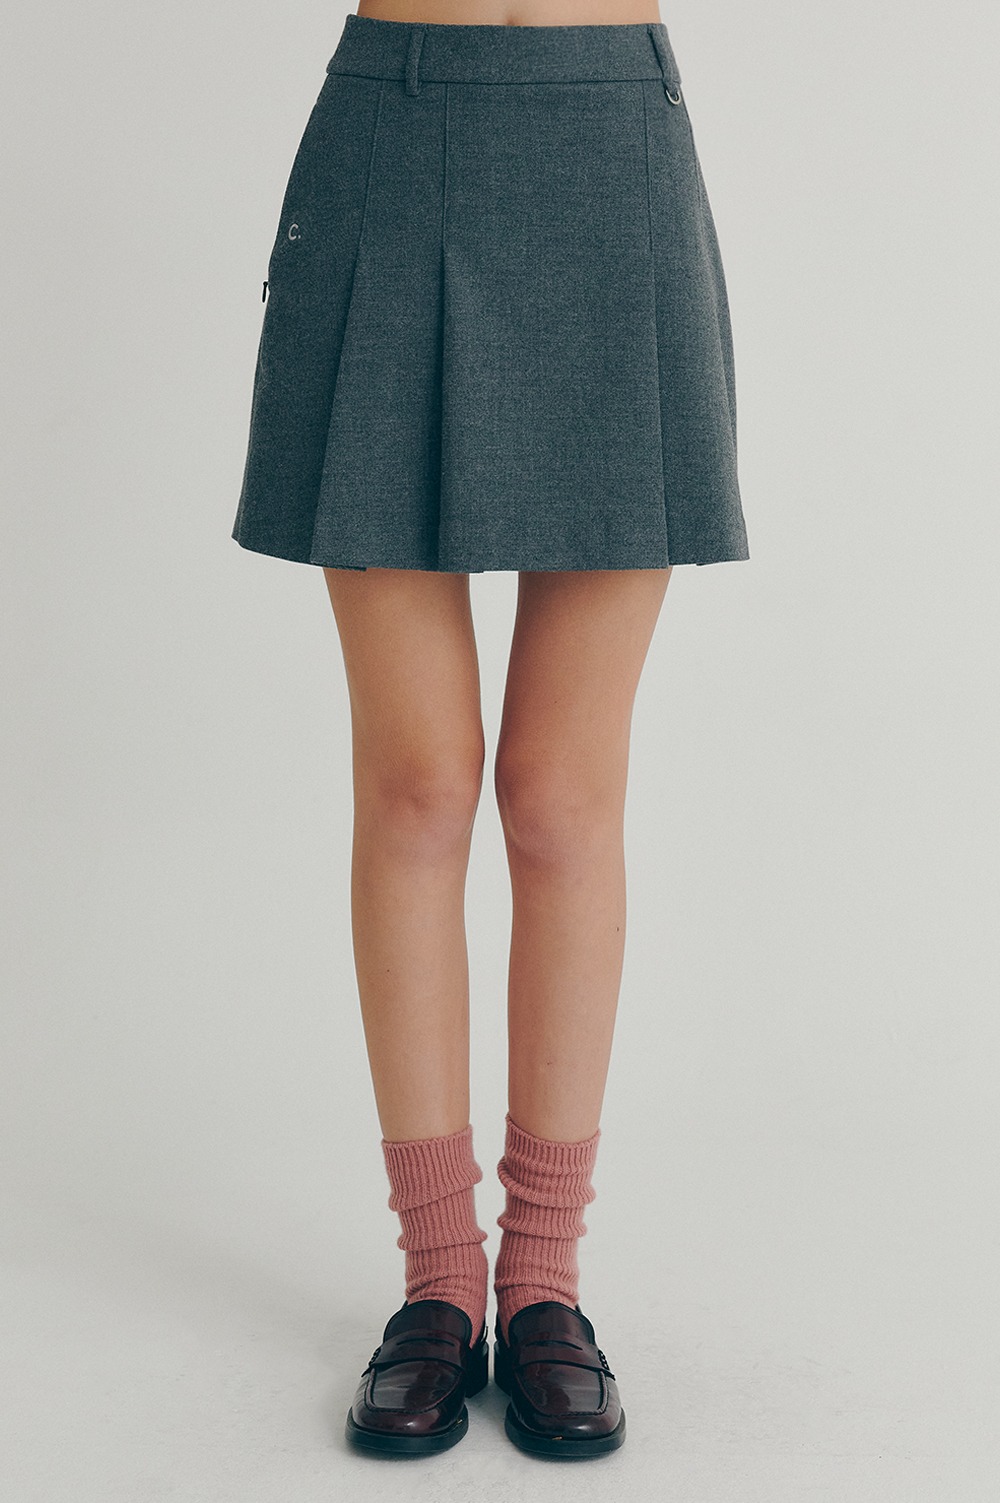 clove - [22FW clove] Wool Pleated Skirt (Charcoal)